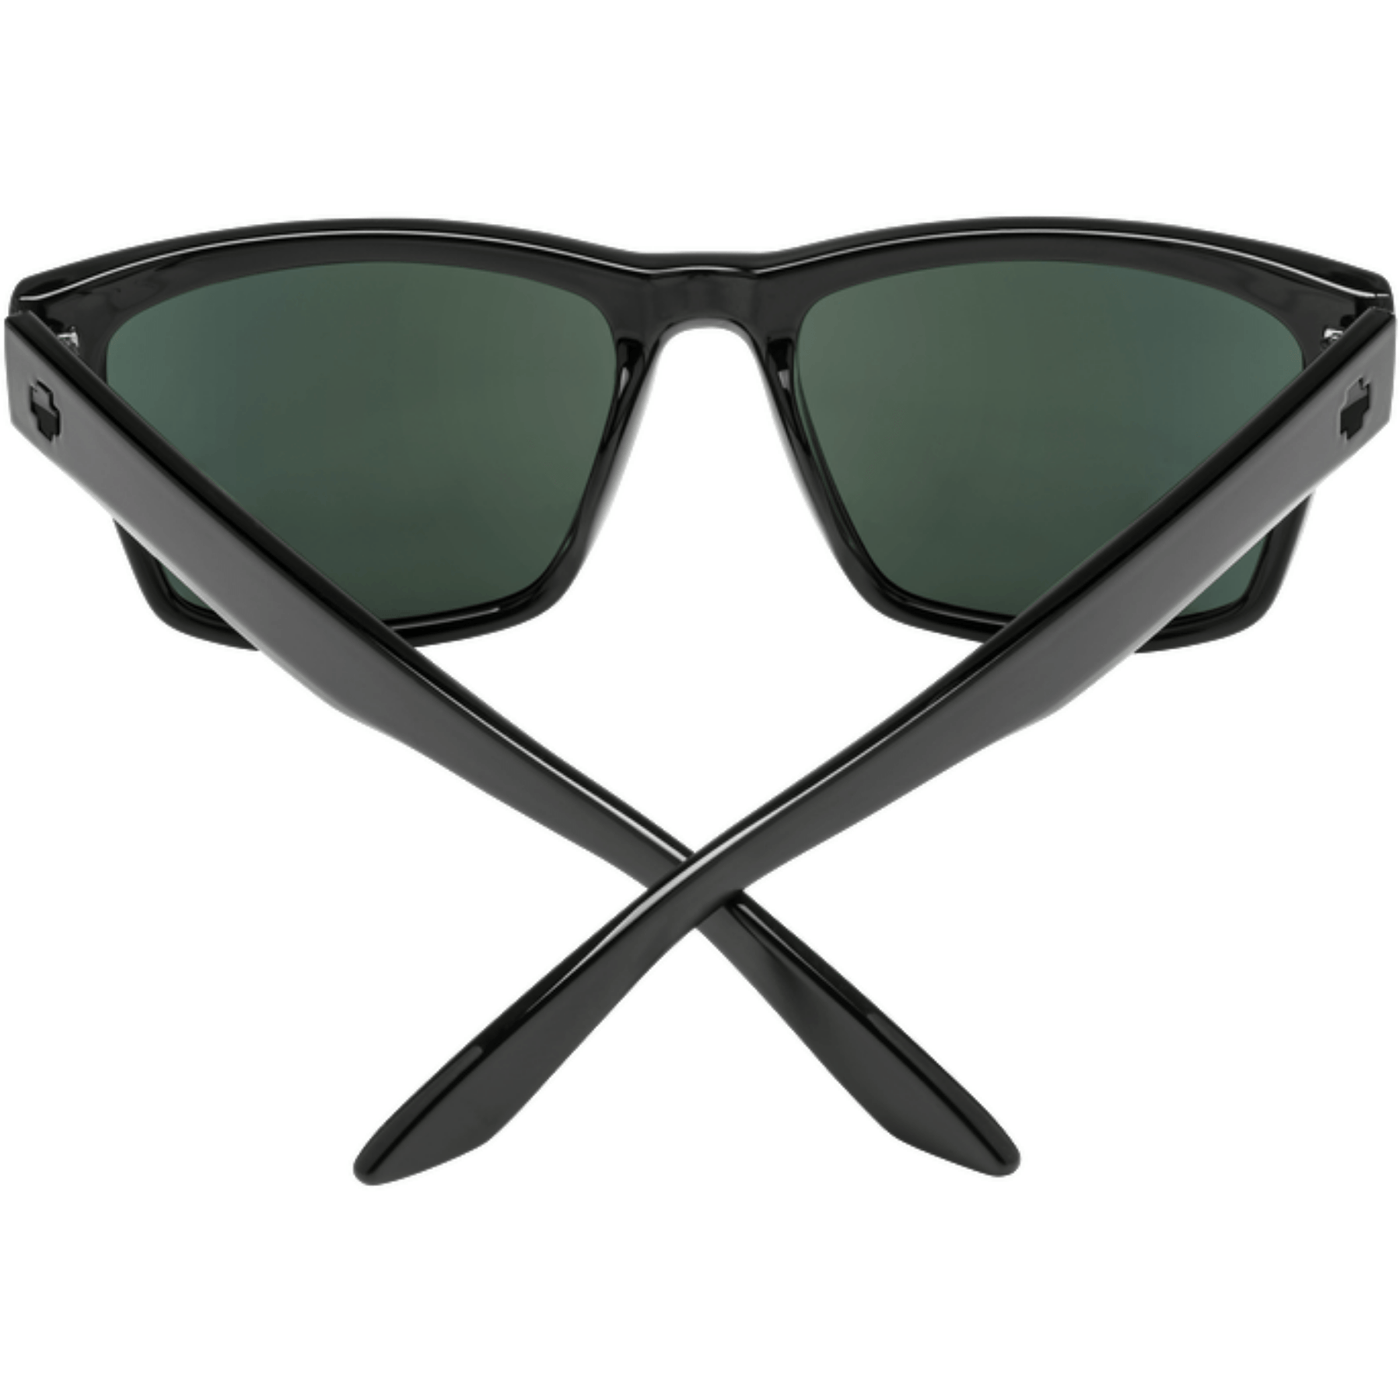 SPY HAIGHT 2 Polarized Sunglasses, Happy Lens - SOSI Black 8Lines Shop - Fast Shipping